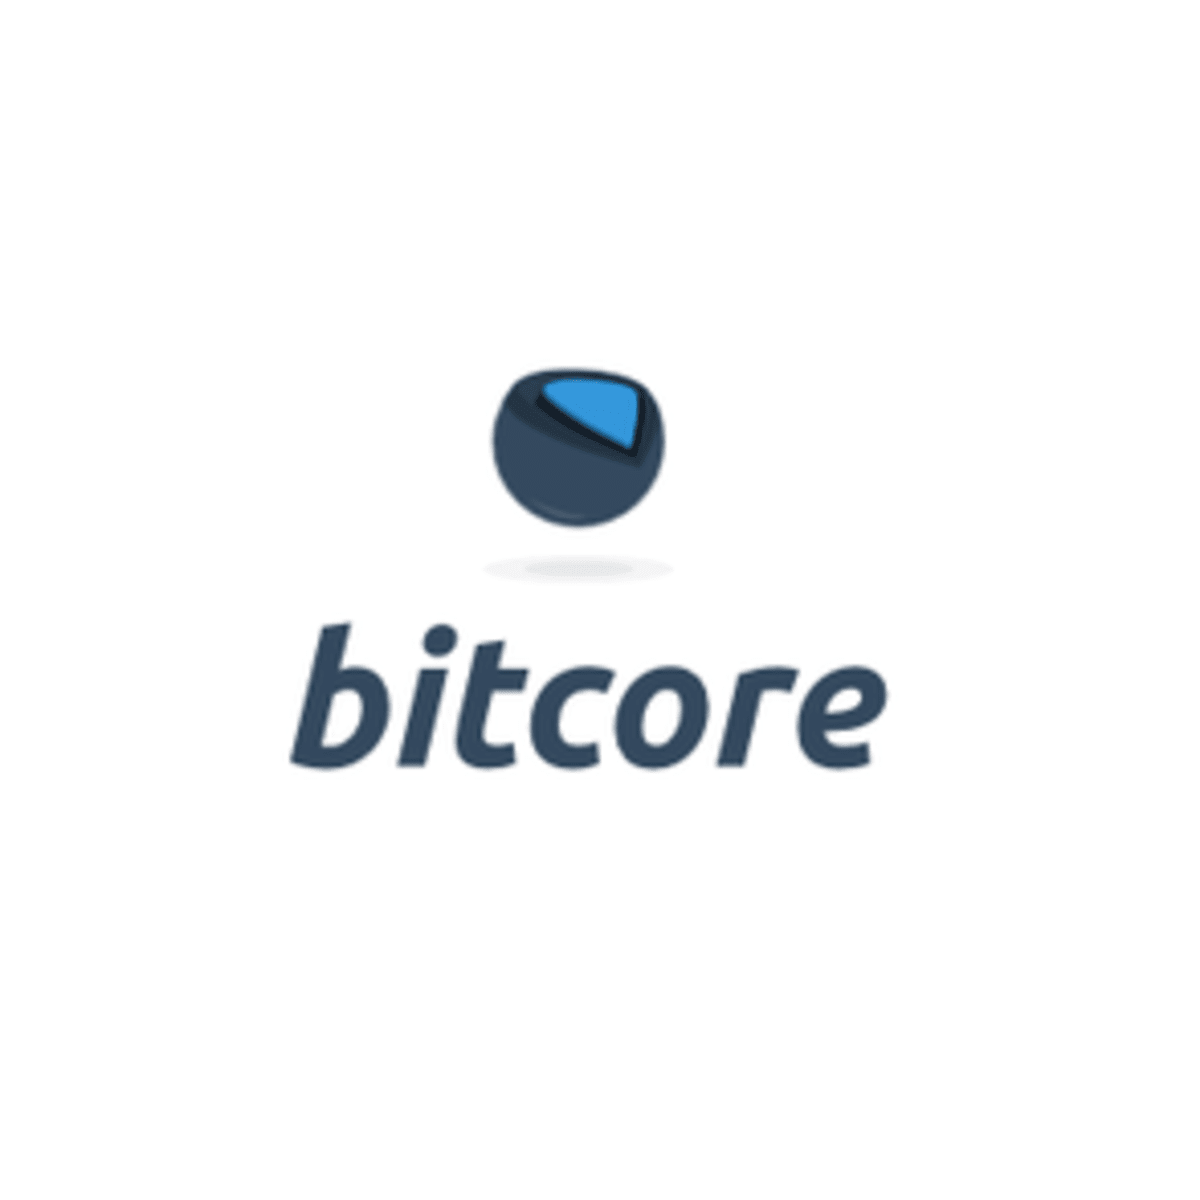 Bitcoin Core - CoinDesk